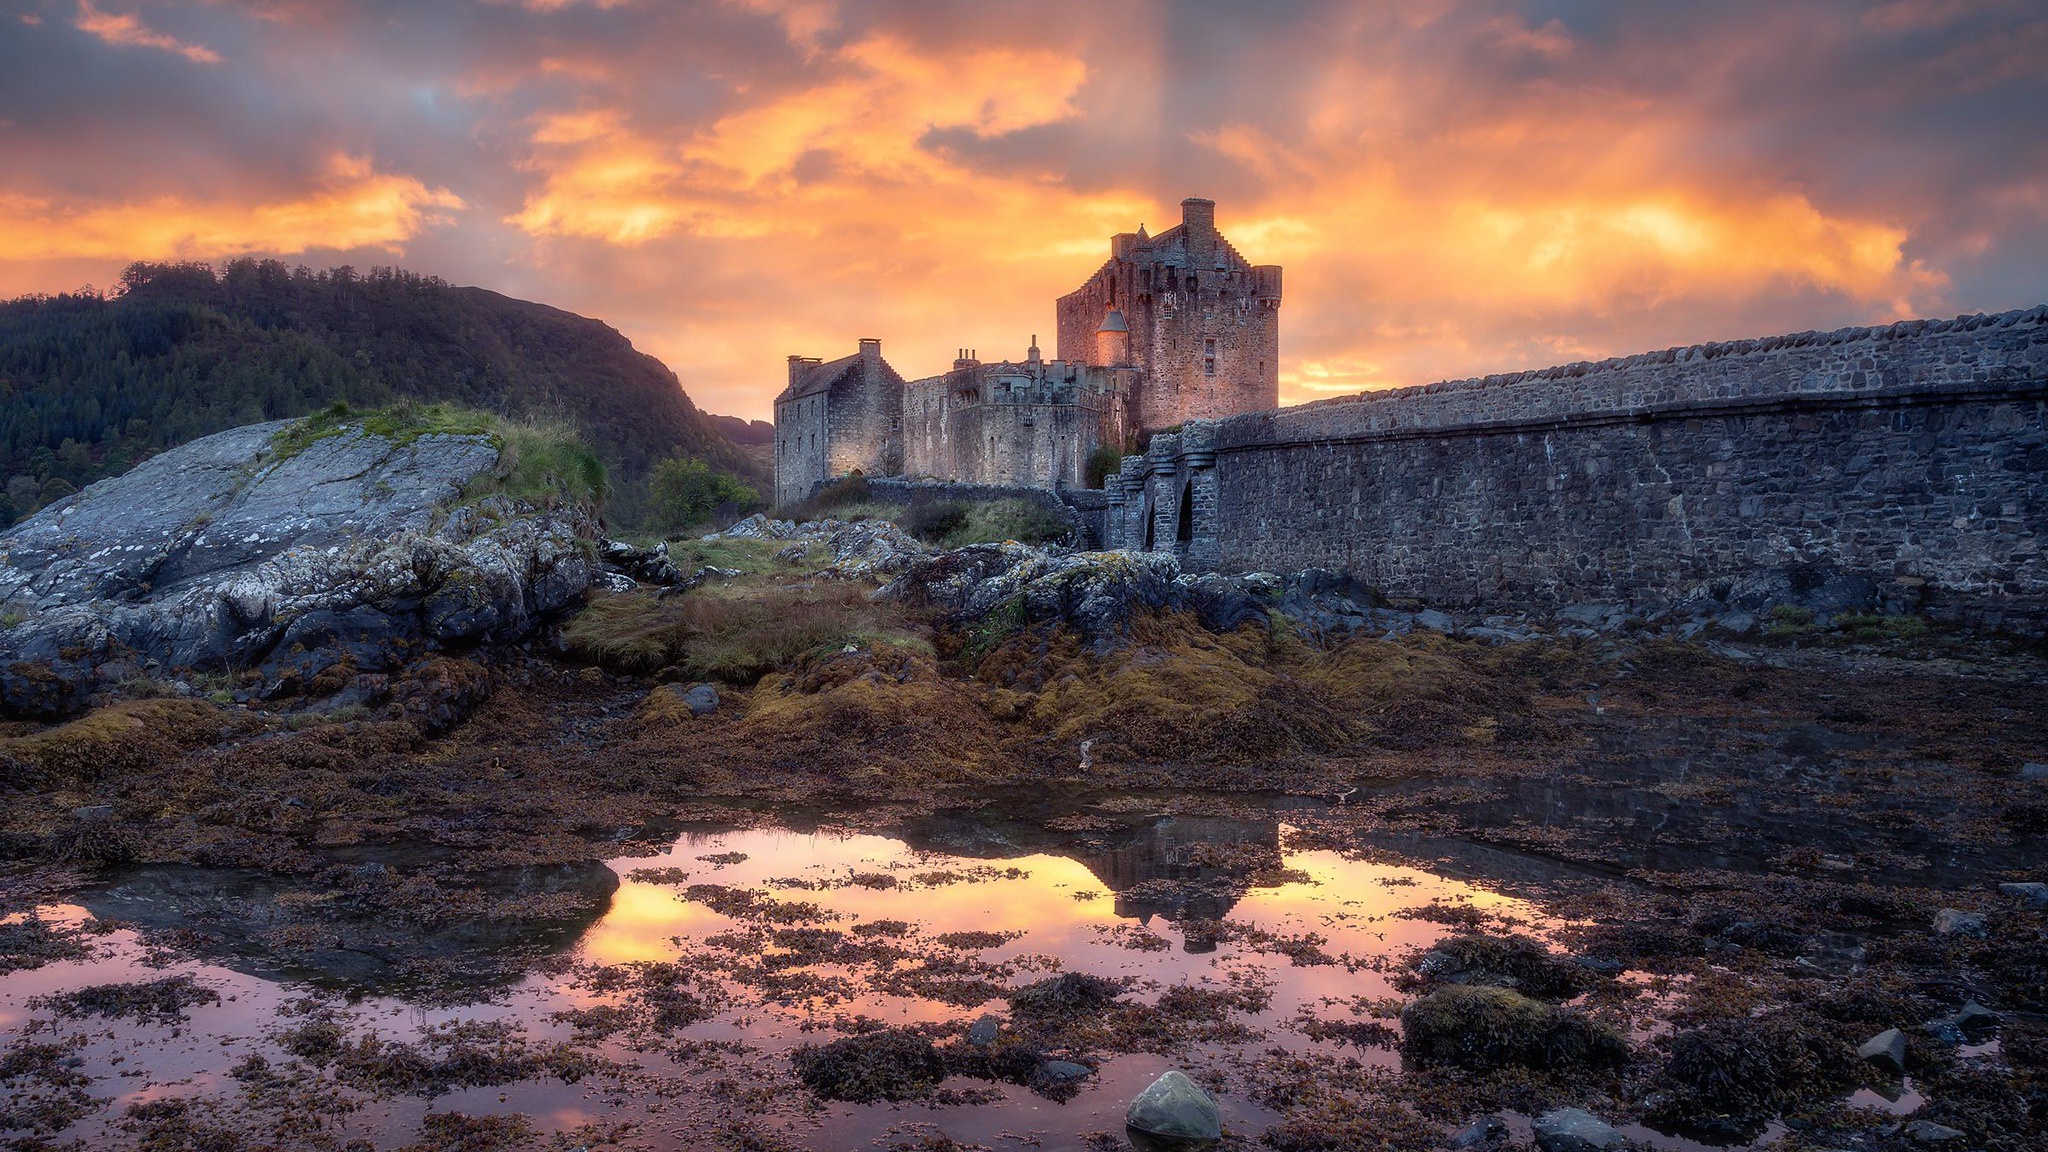 General 2048x1152 Scotland outdoors castle building clouds sunlight Eilean Donan reflection